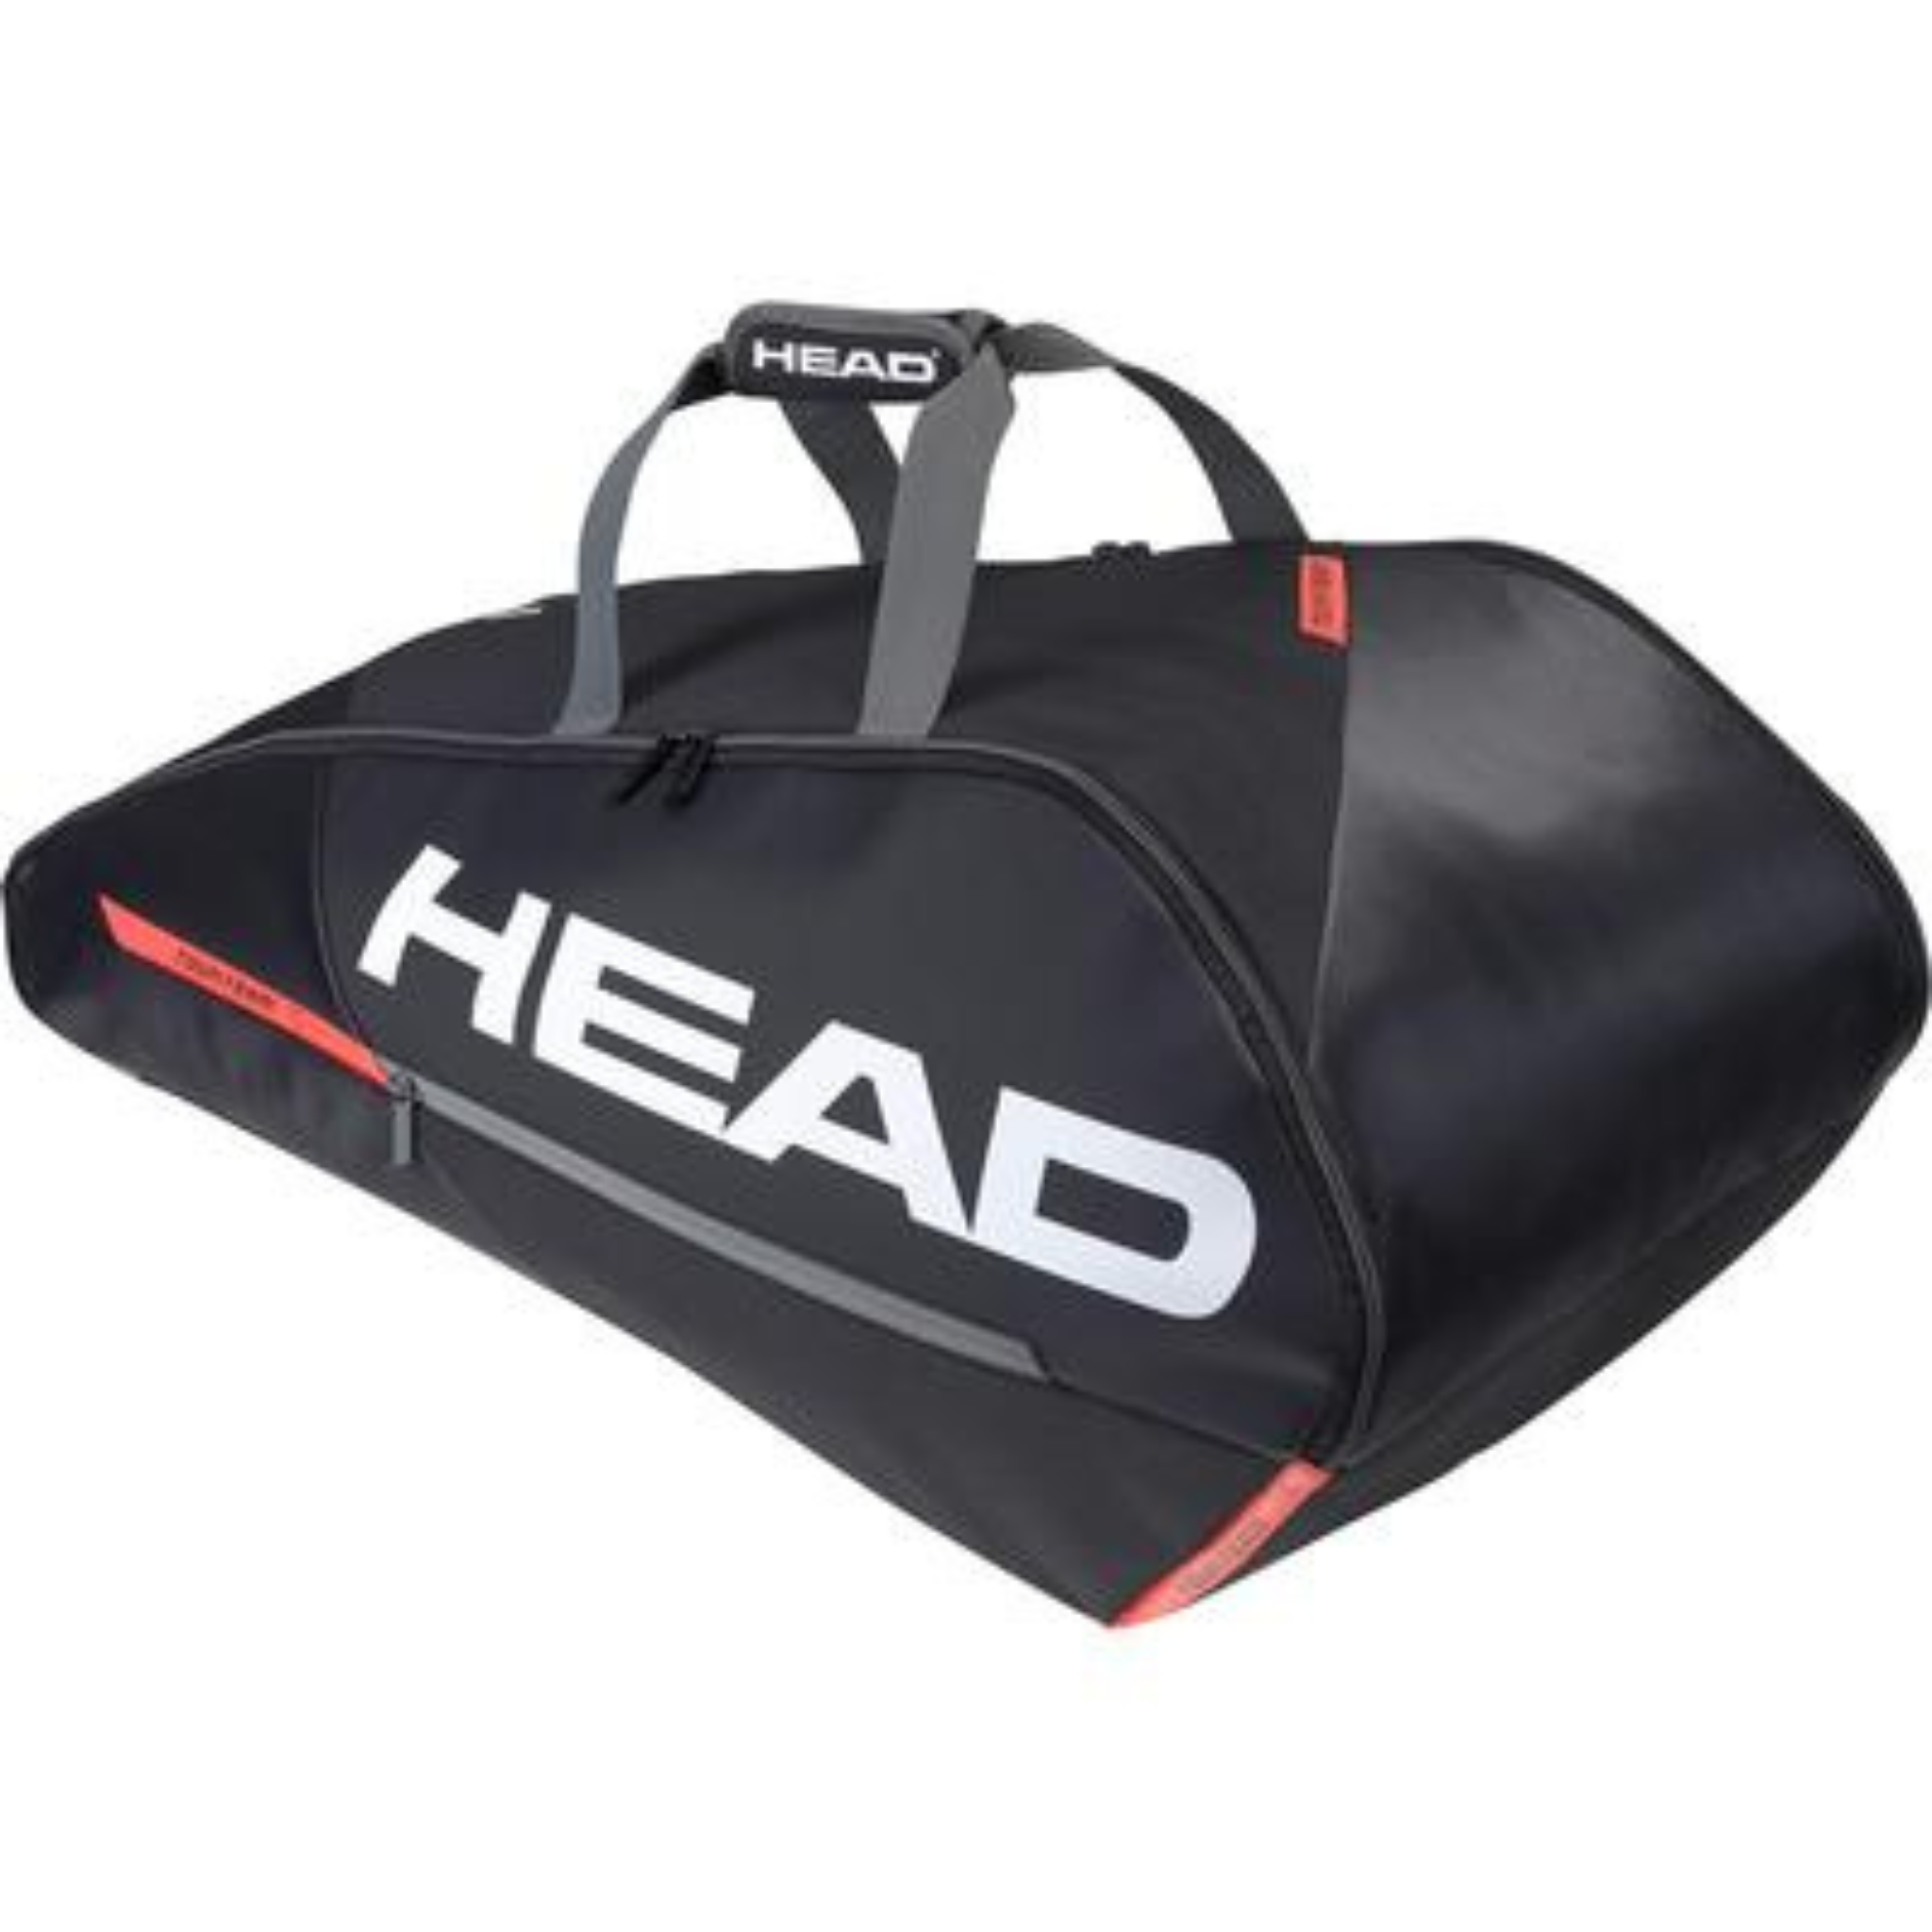 HEAD Tour Team Supercombi 9 Racket - Black/Orange